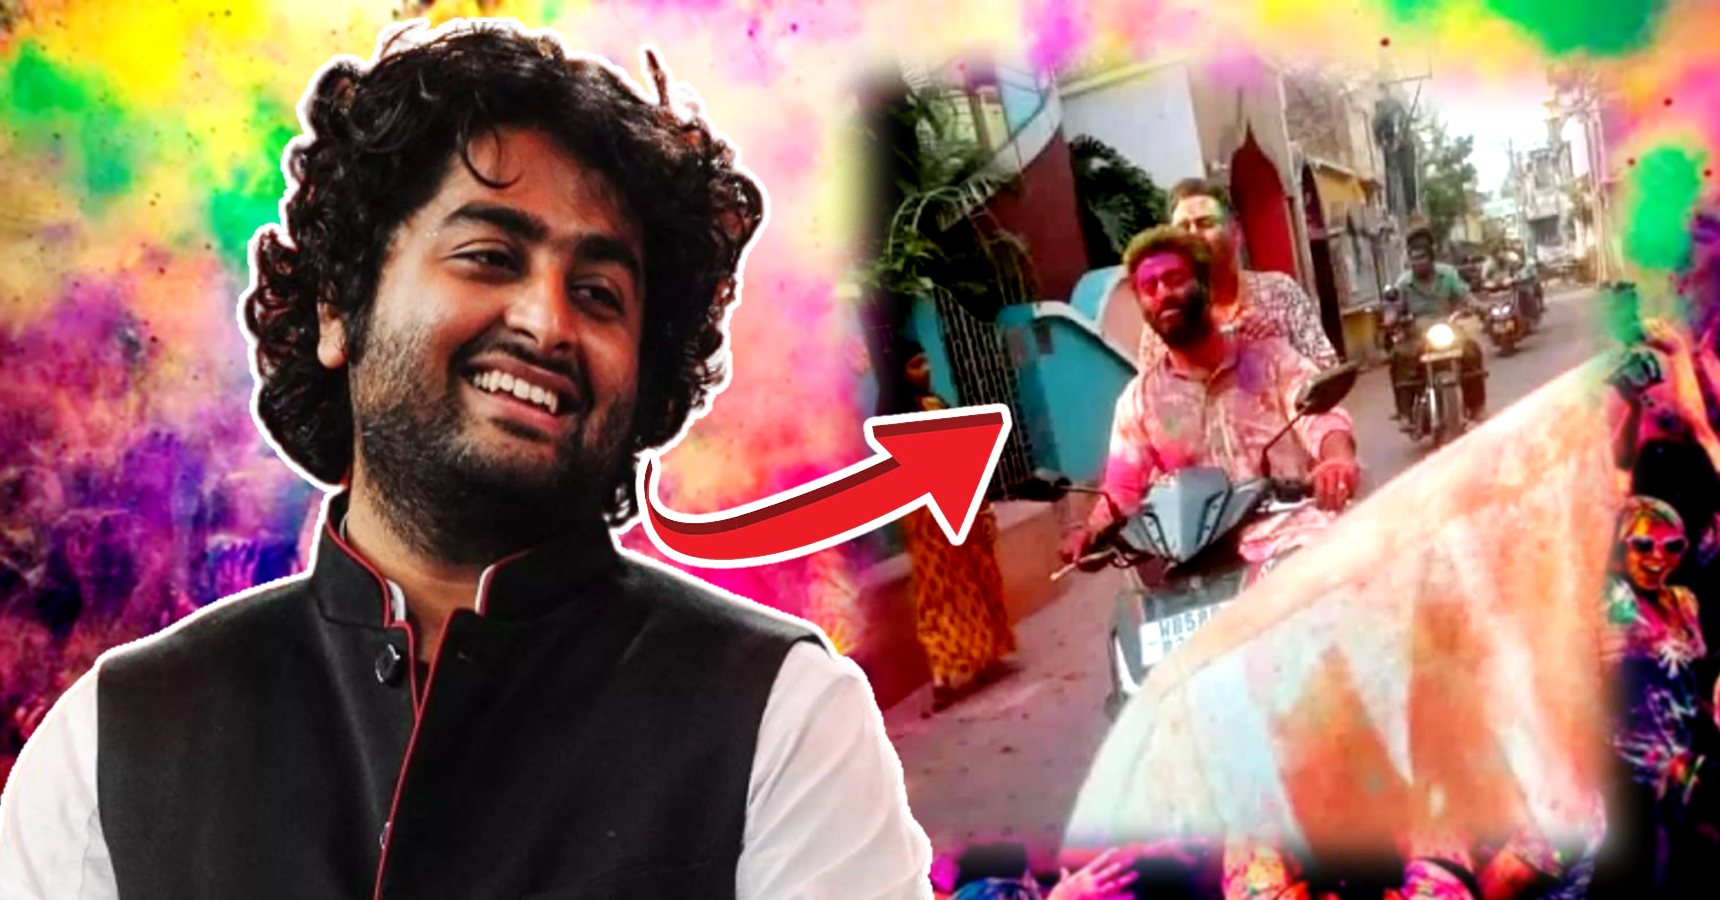 Arijit Singh at Jiyaganj riding scooty on Holi photo viral